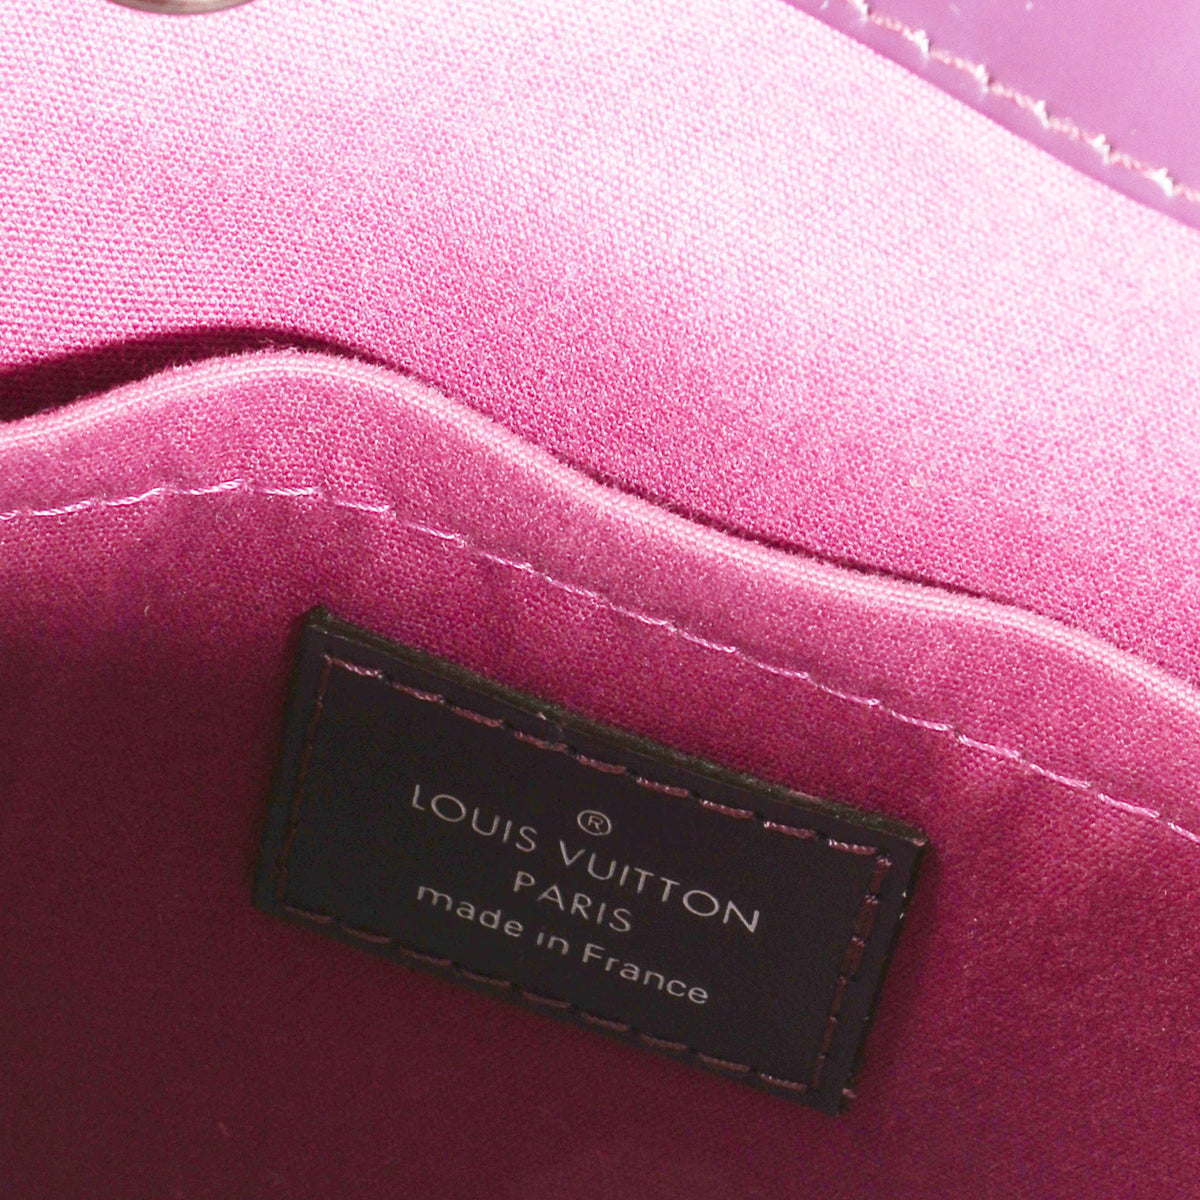 Where Is Louis Vuitton Made?, myGemma